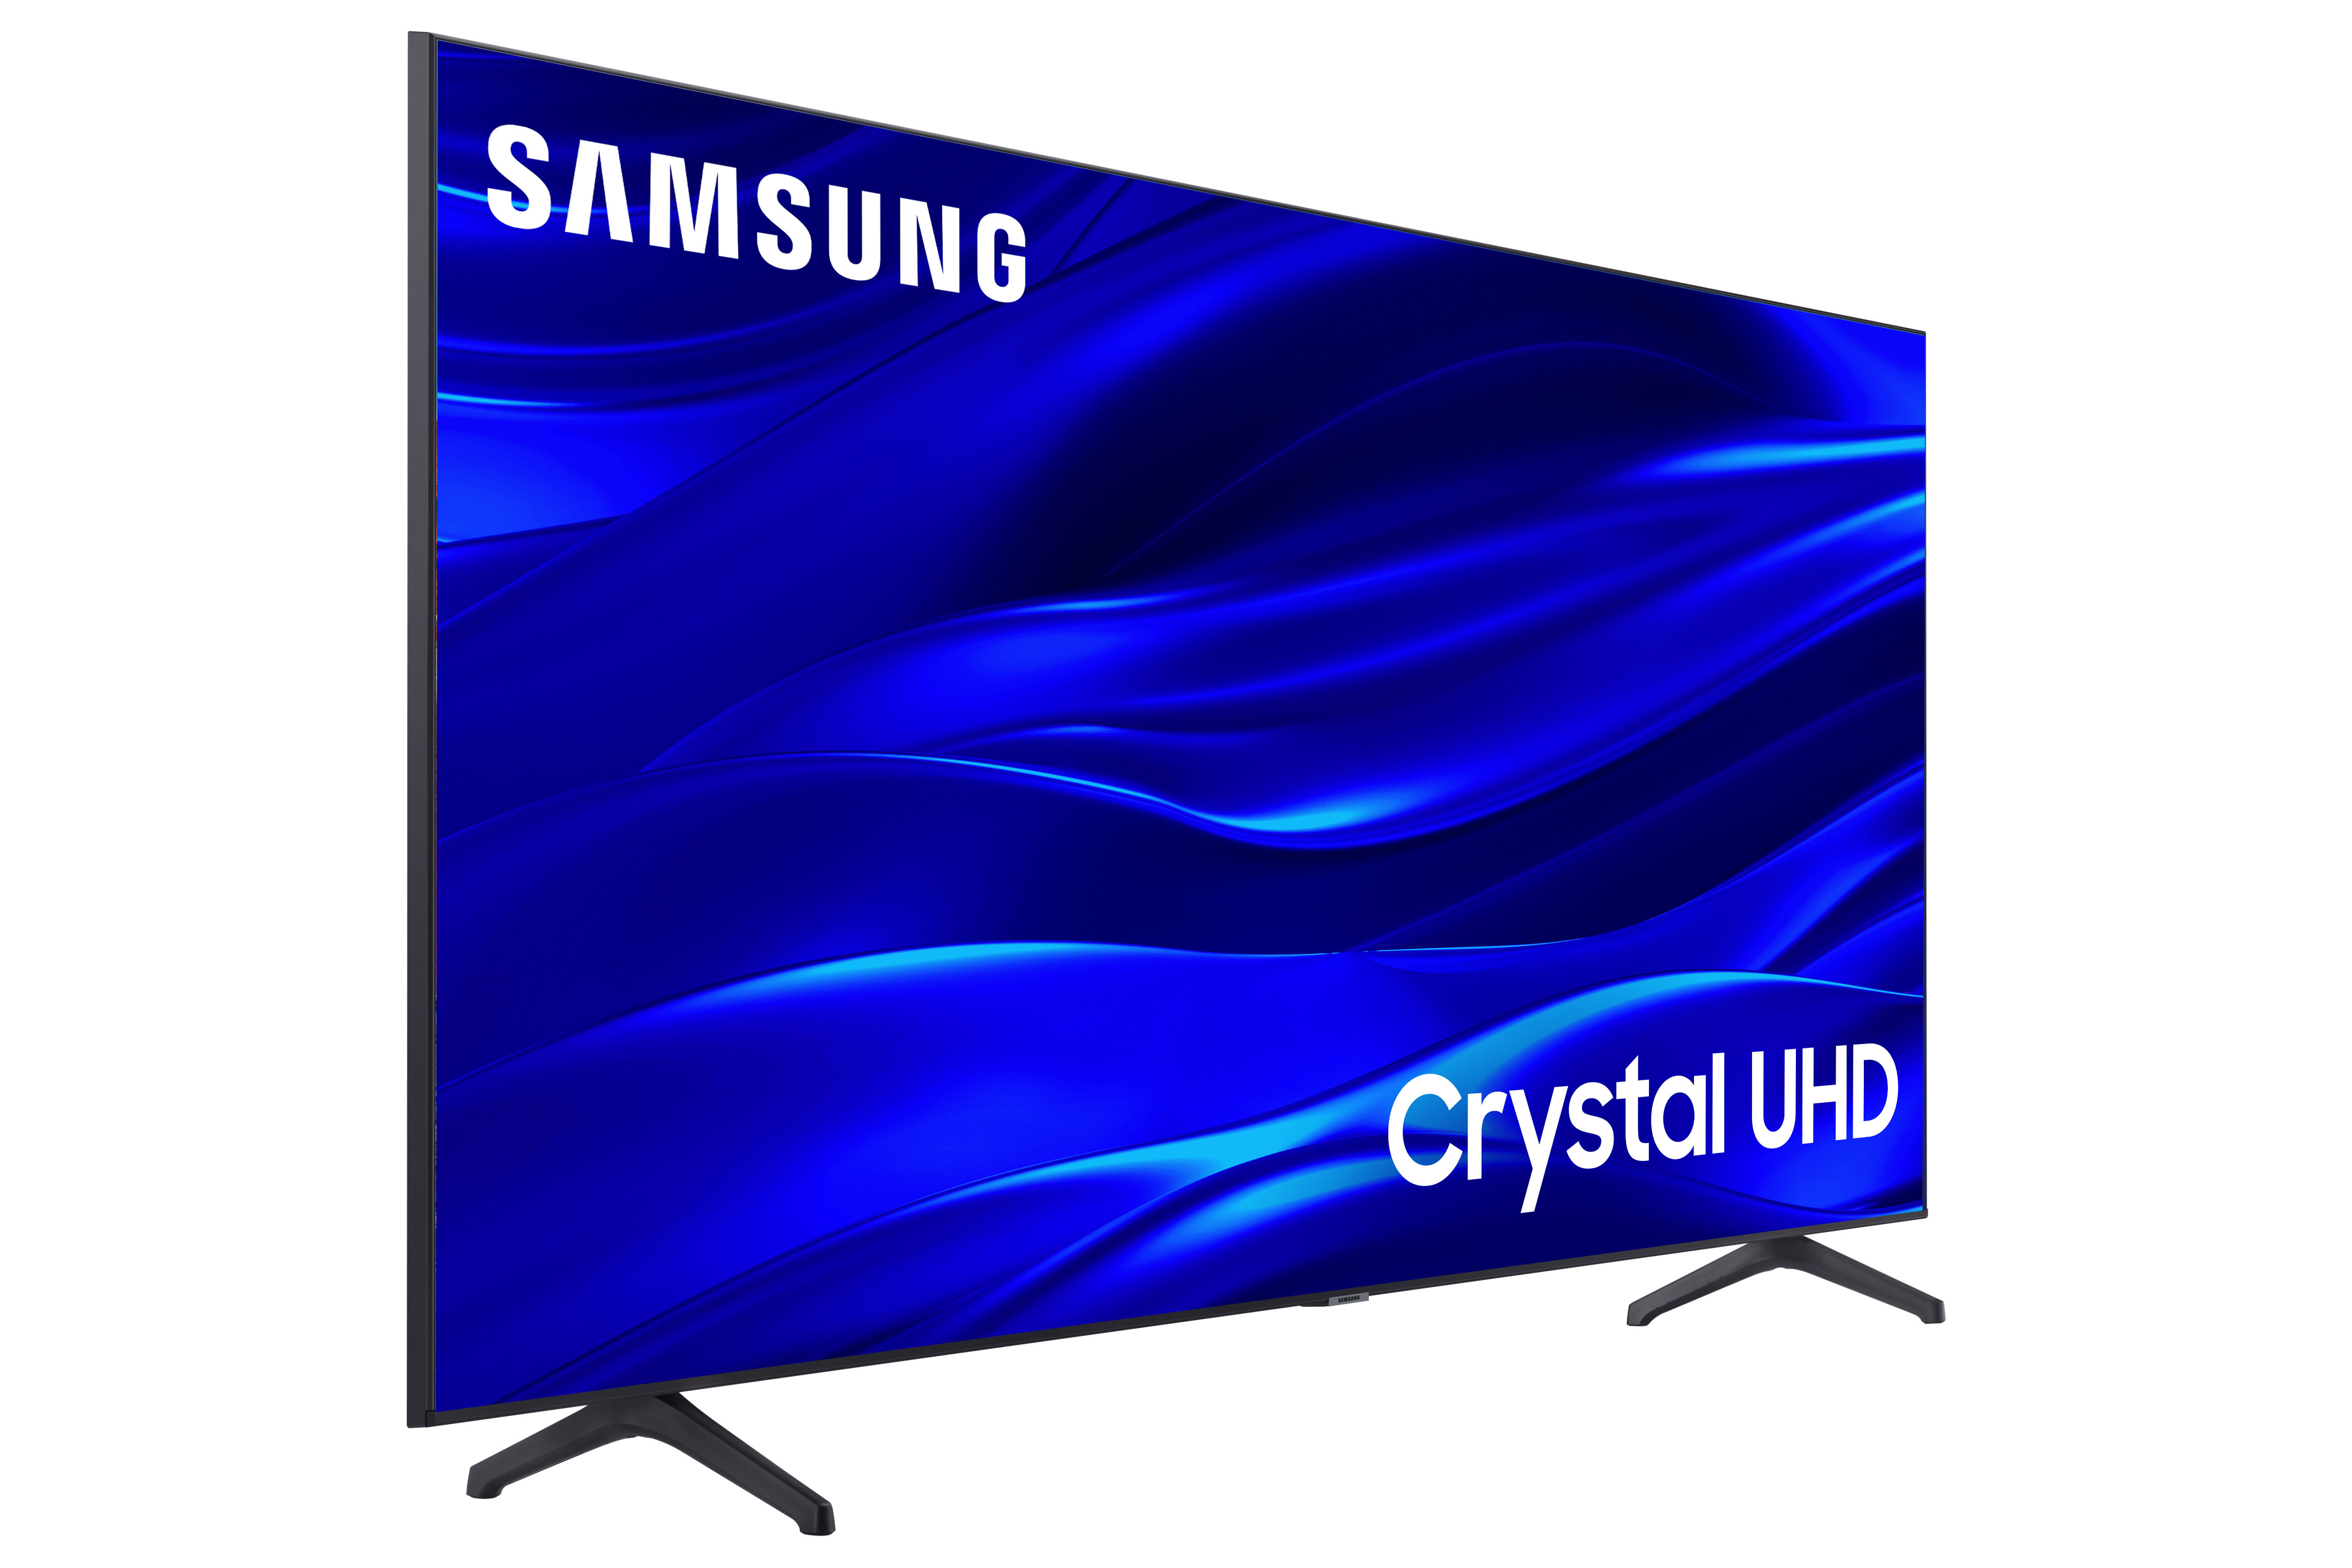 SAMSUNG 55" Class TU690T Crystal UHD 4K Smart Television - UN55TU690TFXZA (New) - image 2 of 10